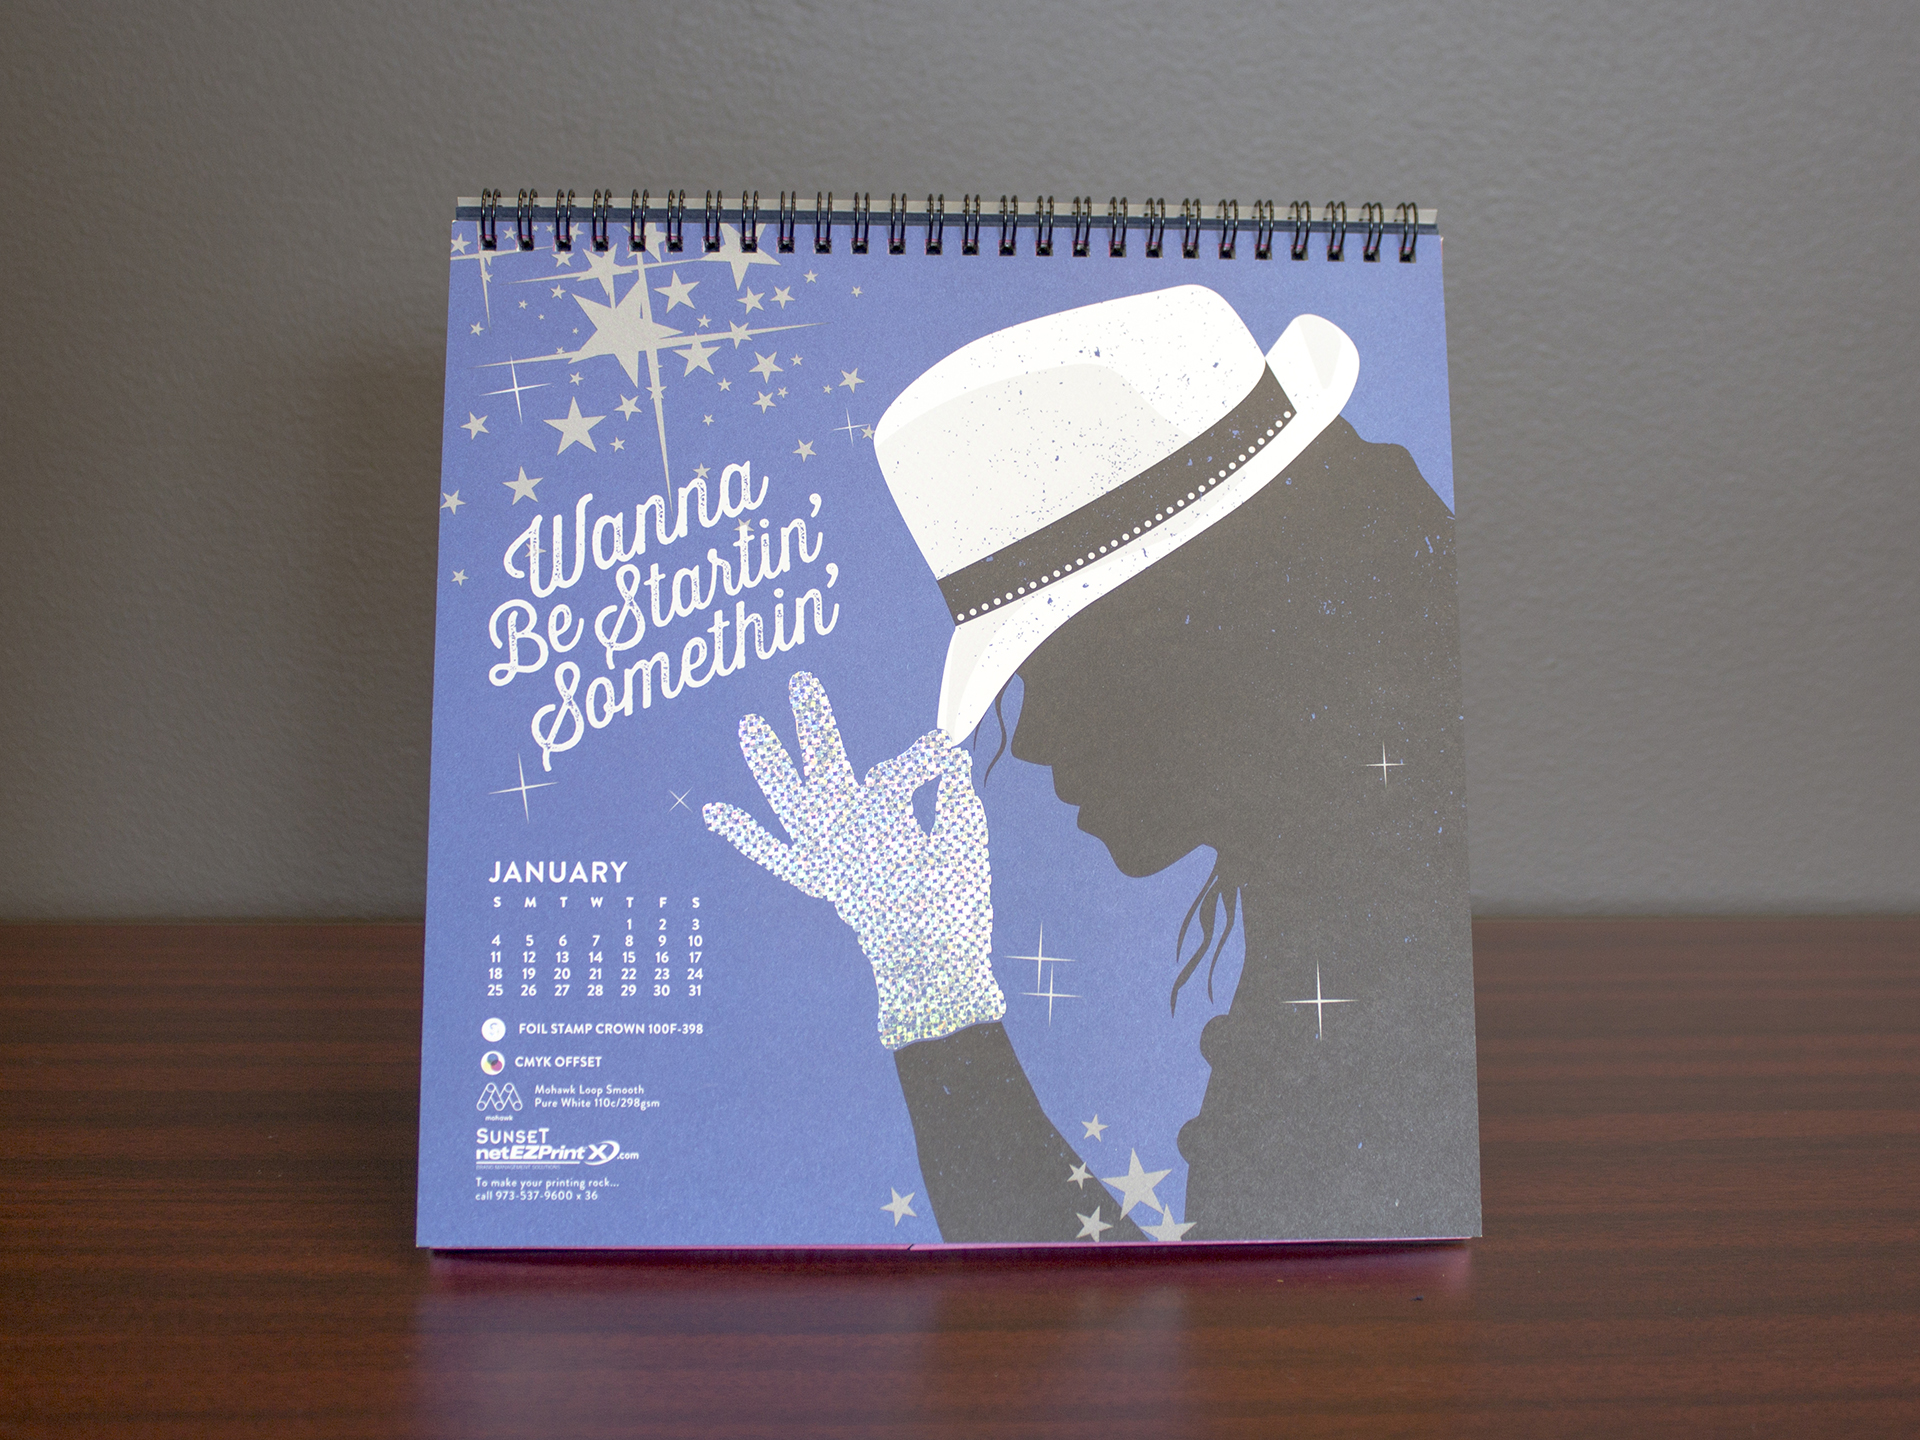 Calendar illustration inspired by Michael Jackson